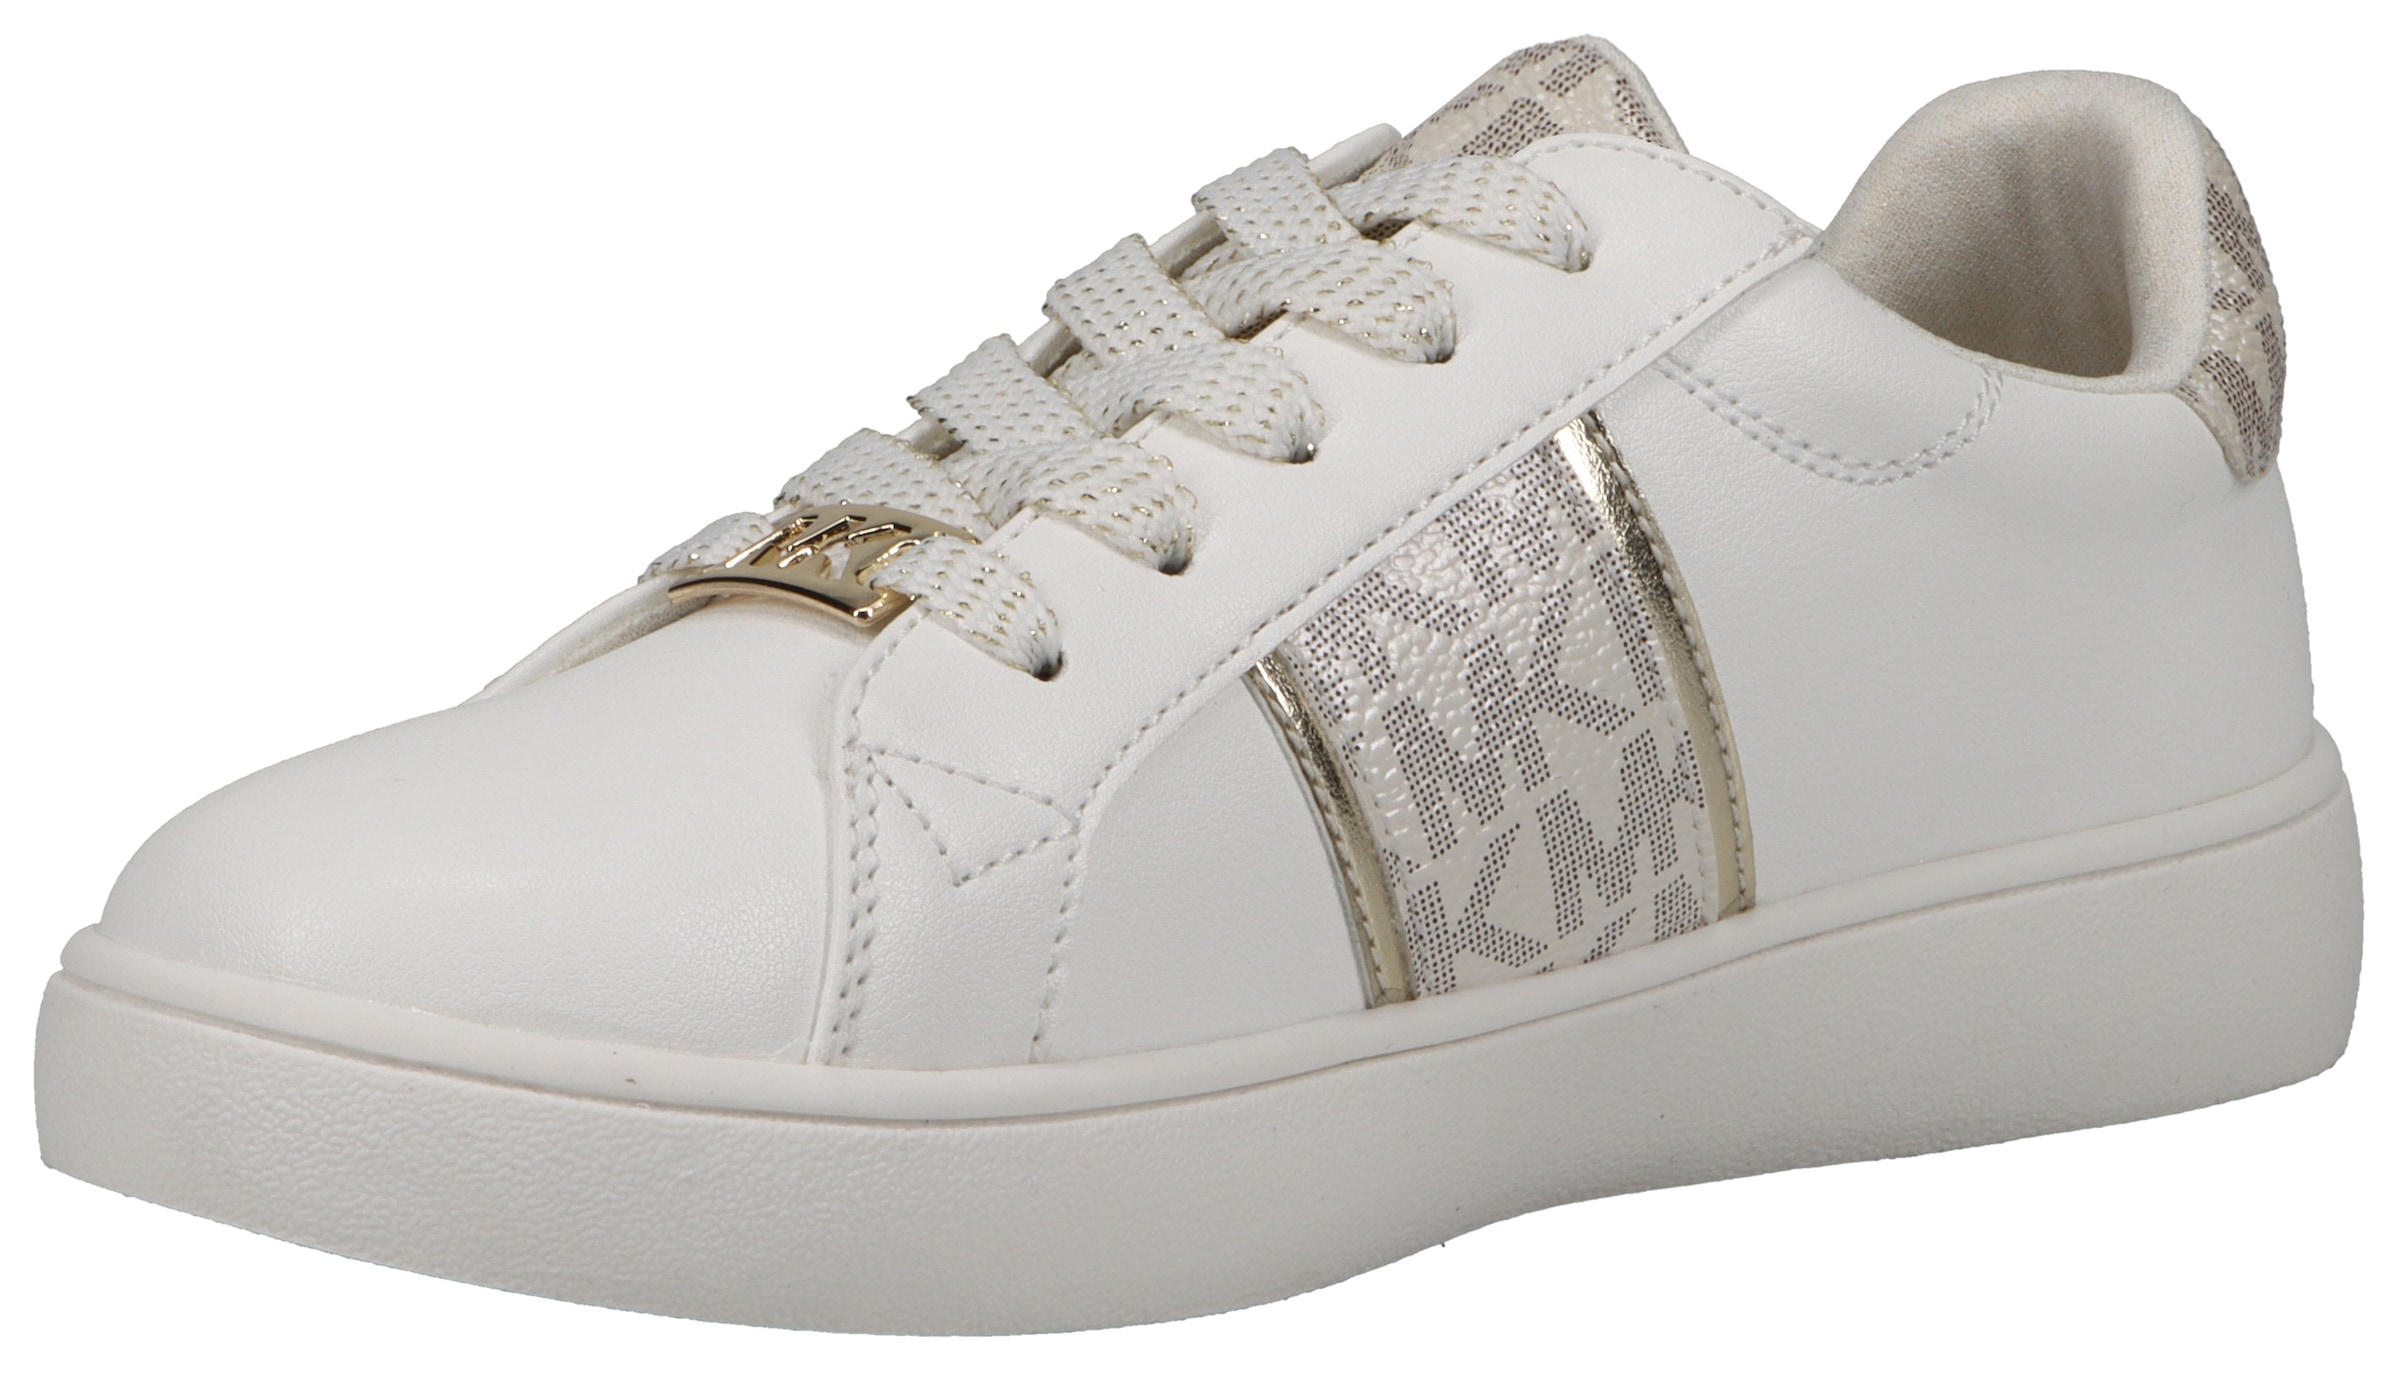 MICHAEL KORS KIDS Sneaker »JEM MAXINE«, mit Michael Kors Monogramm, Freizeitschuh, Halbschuh, Schnürschuh